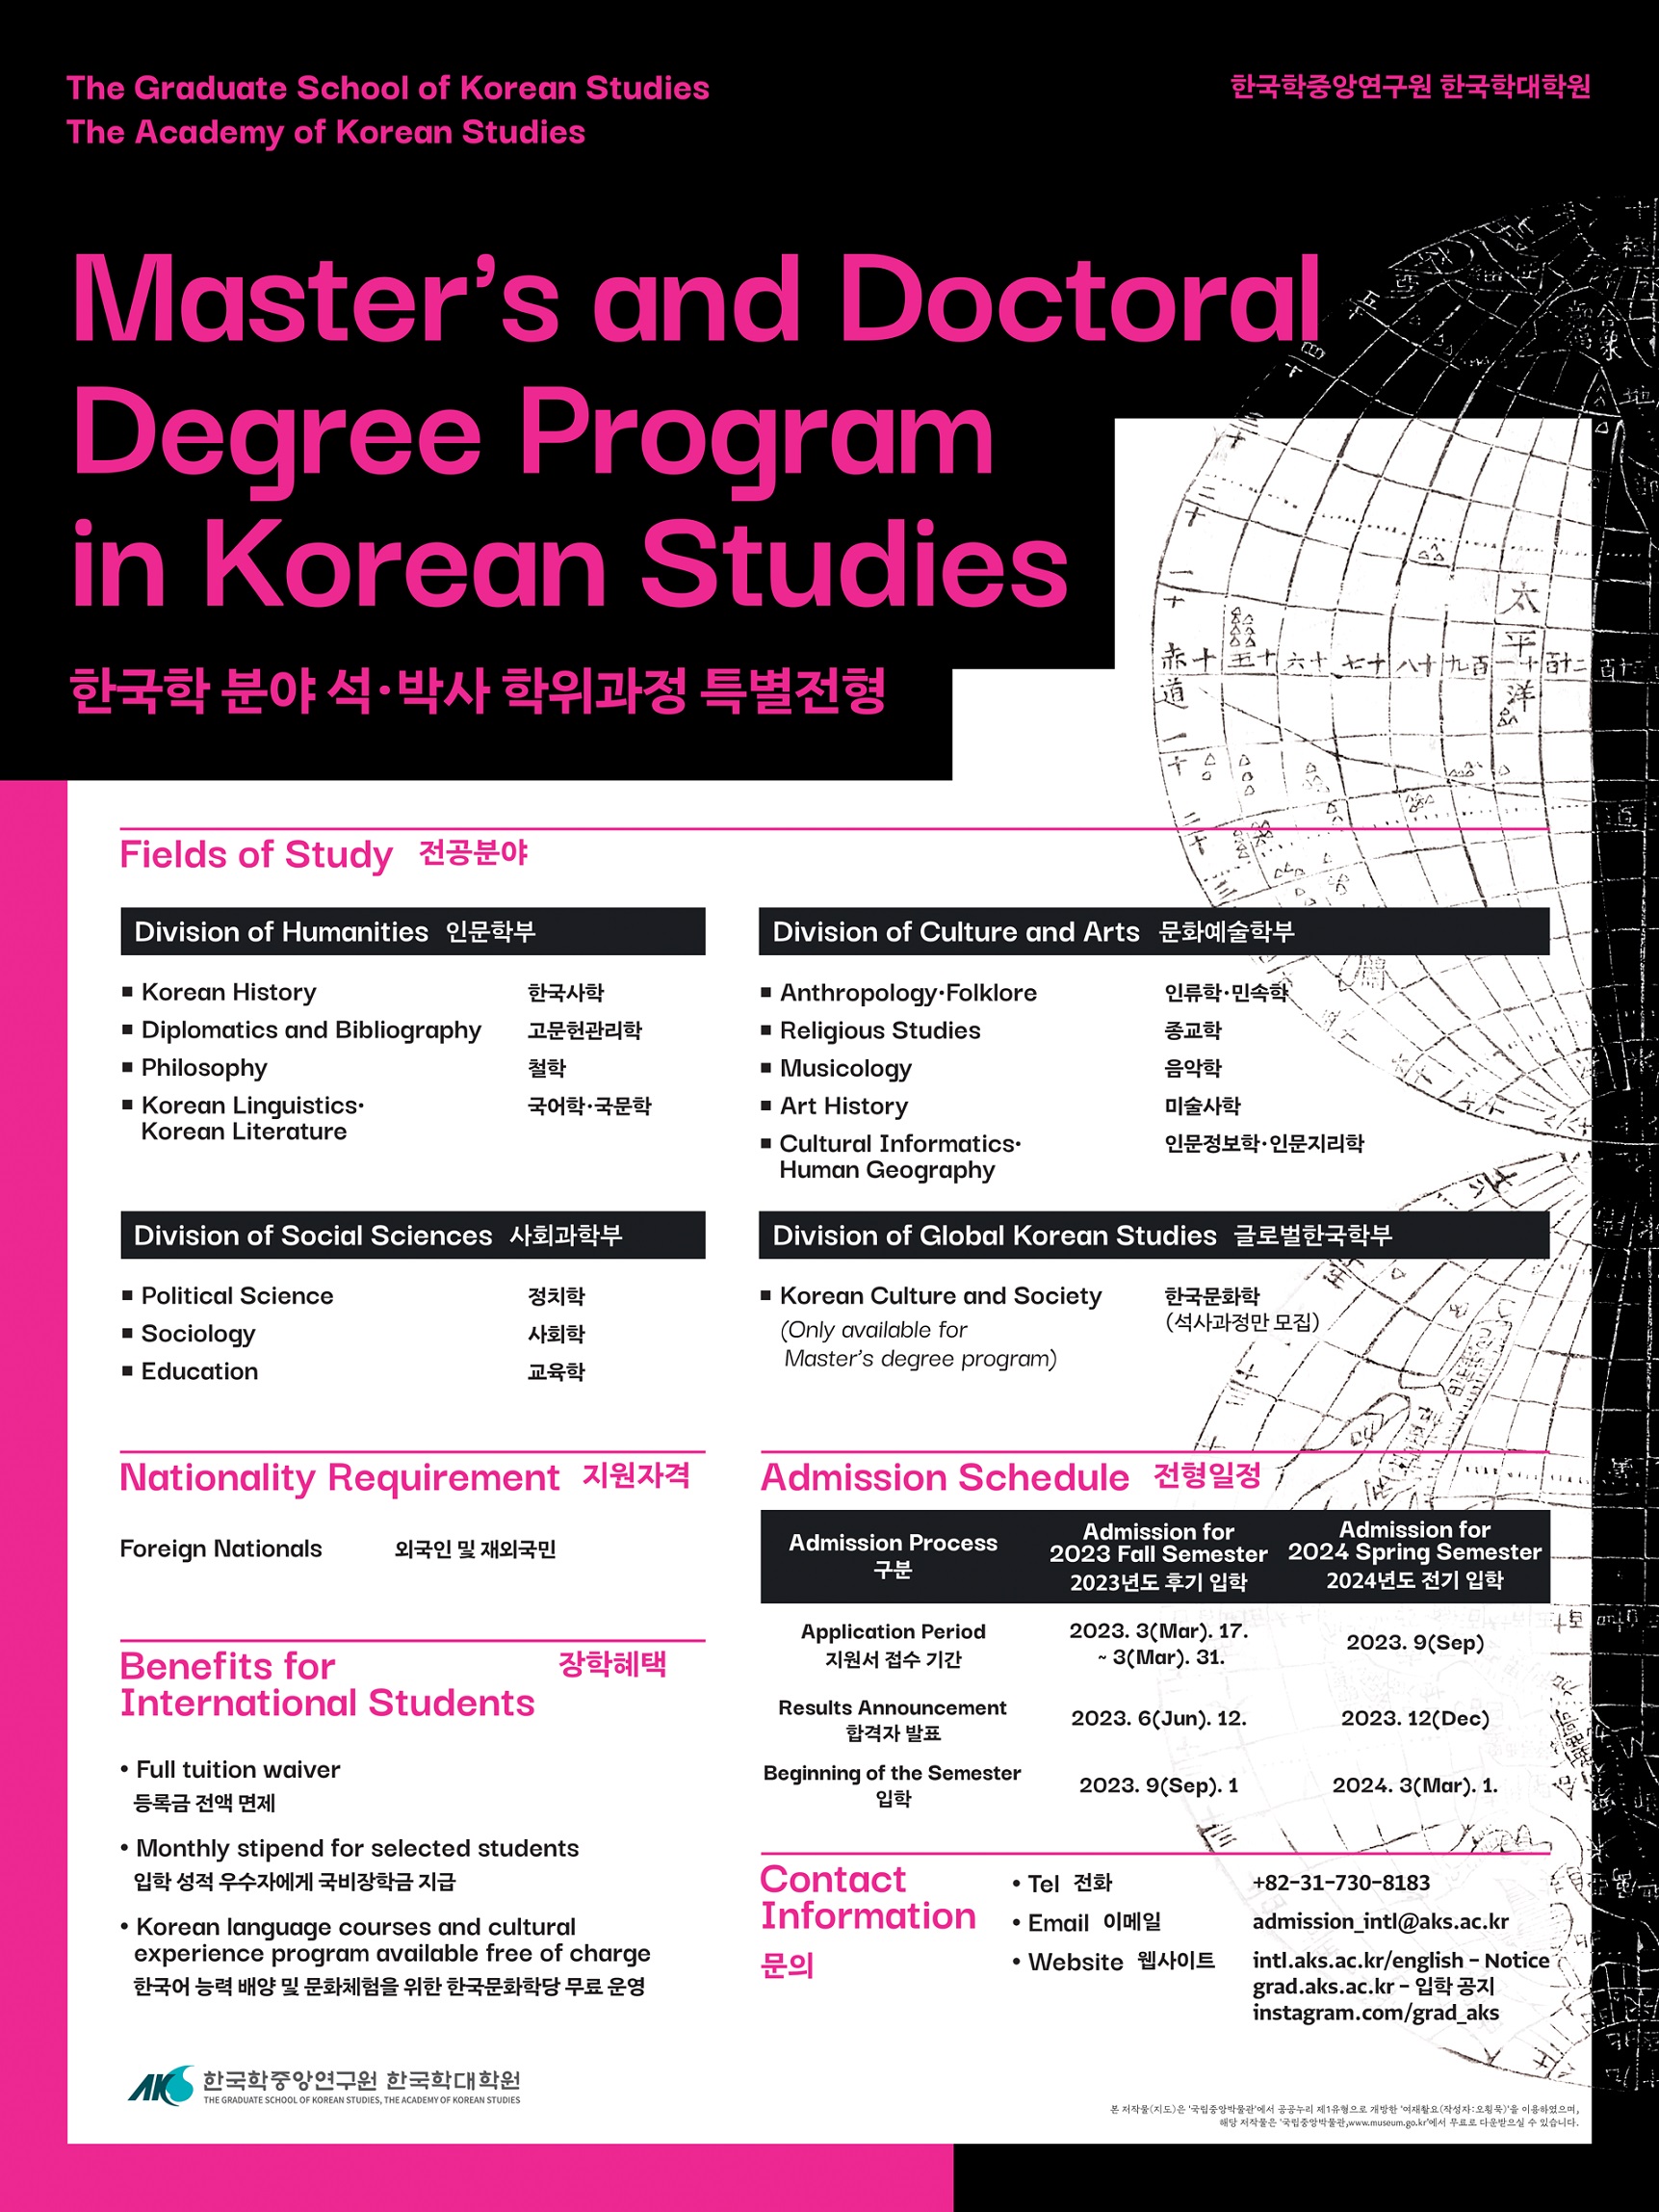 Scholarship Program in Korean Studies